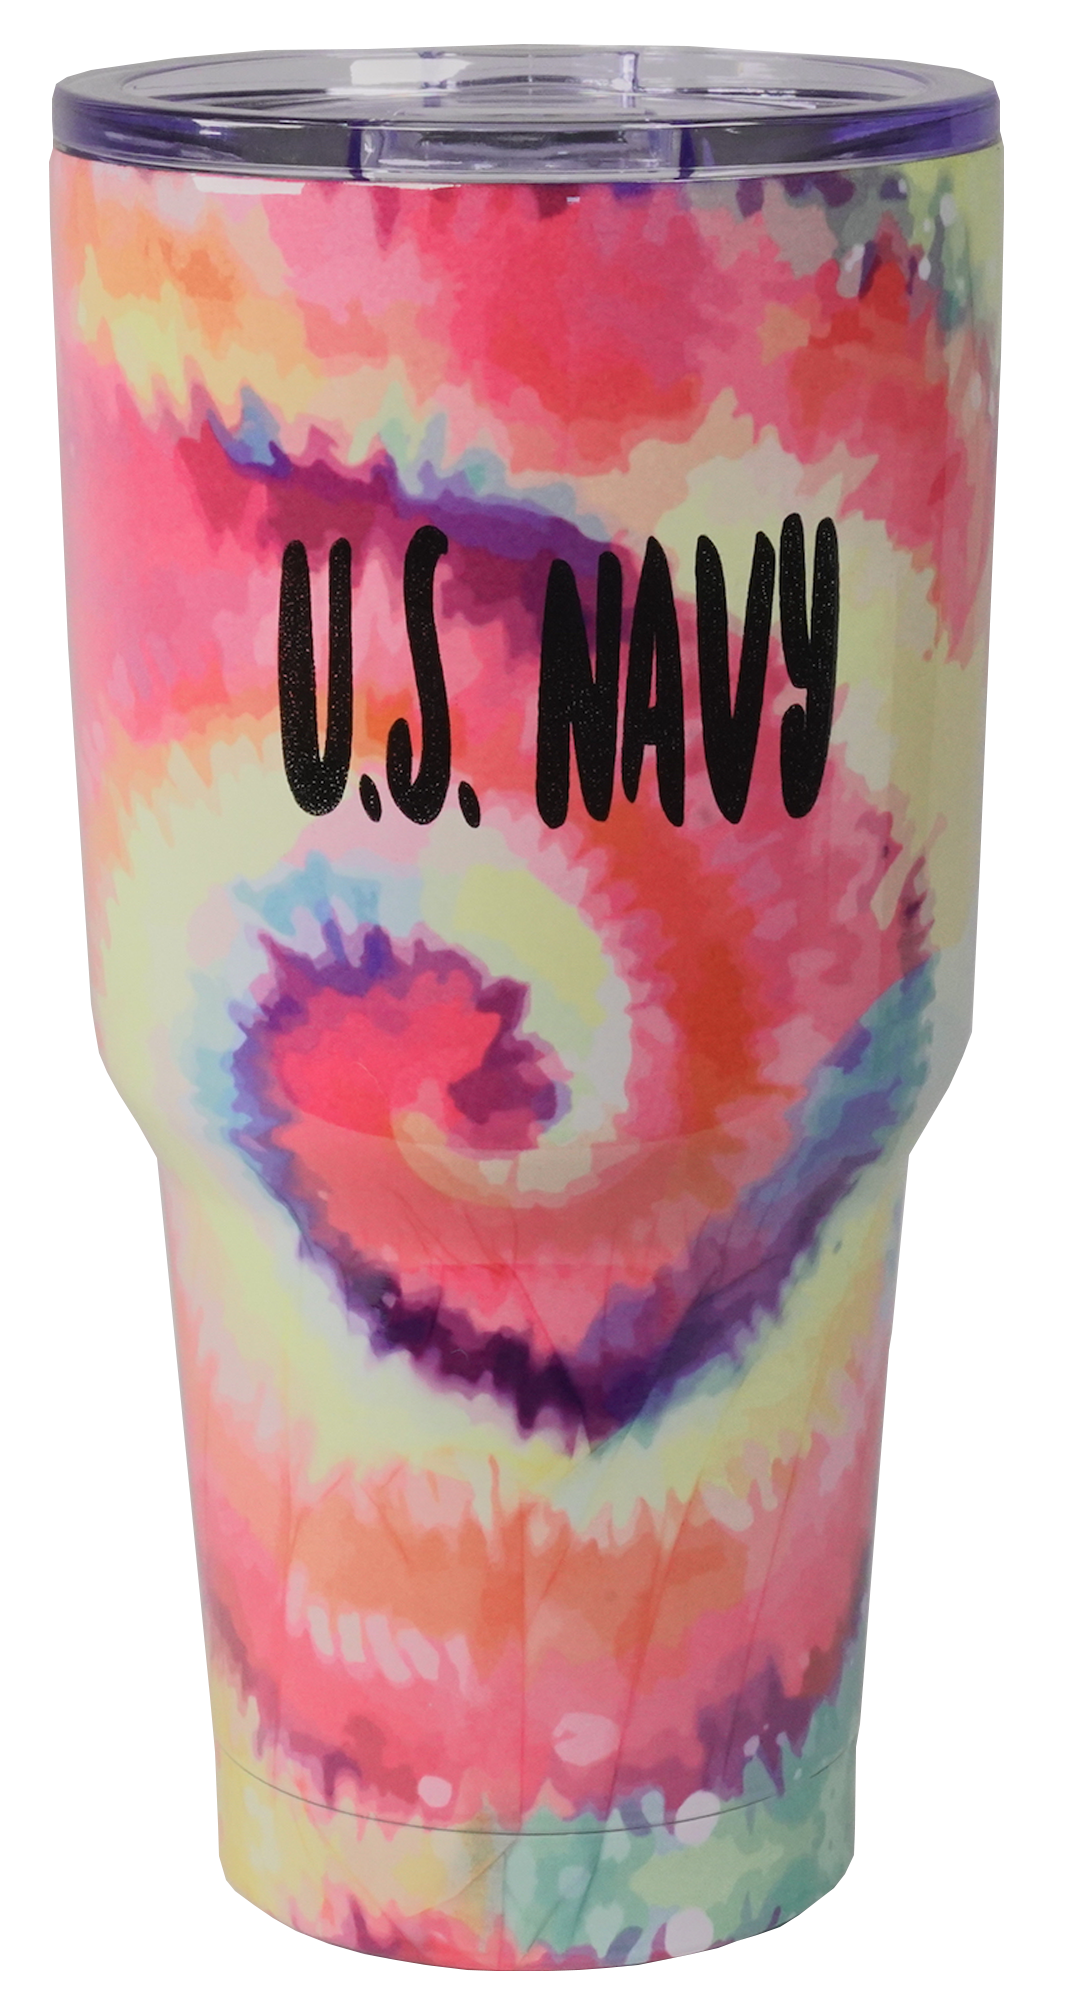 U.S. Navy Imprint on Tye Dye Stainless Tumbler - 28 oz.